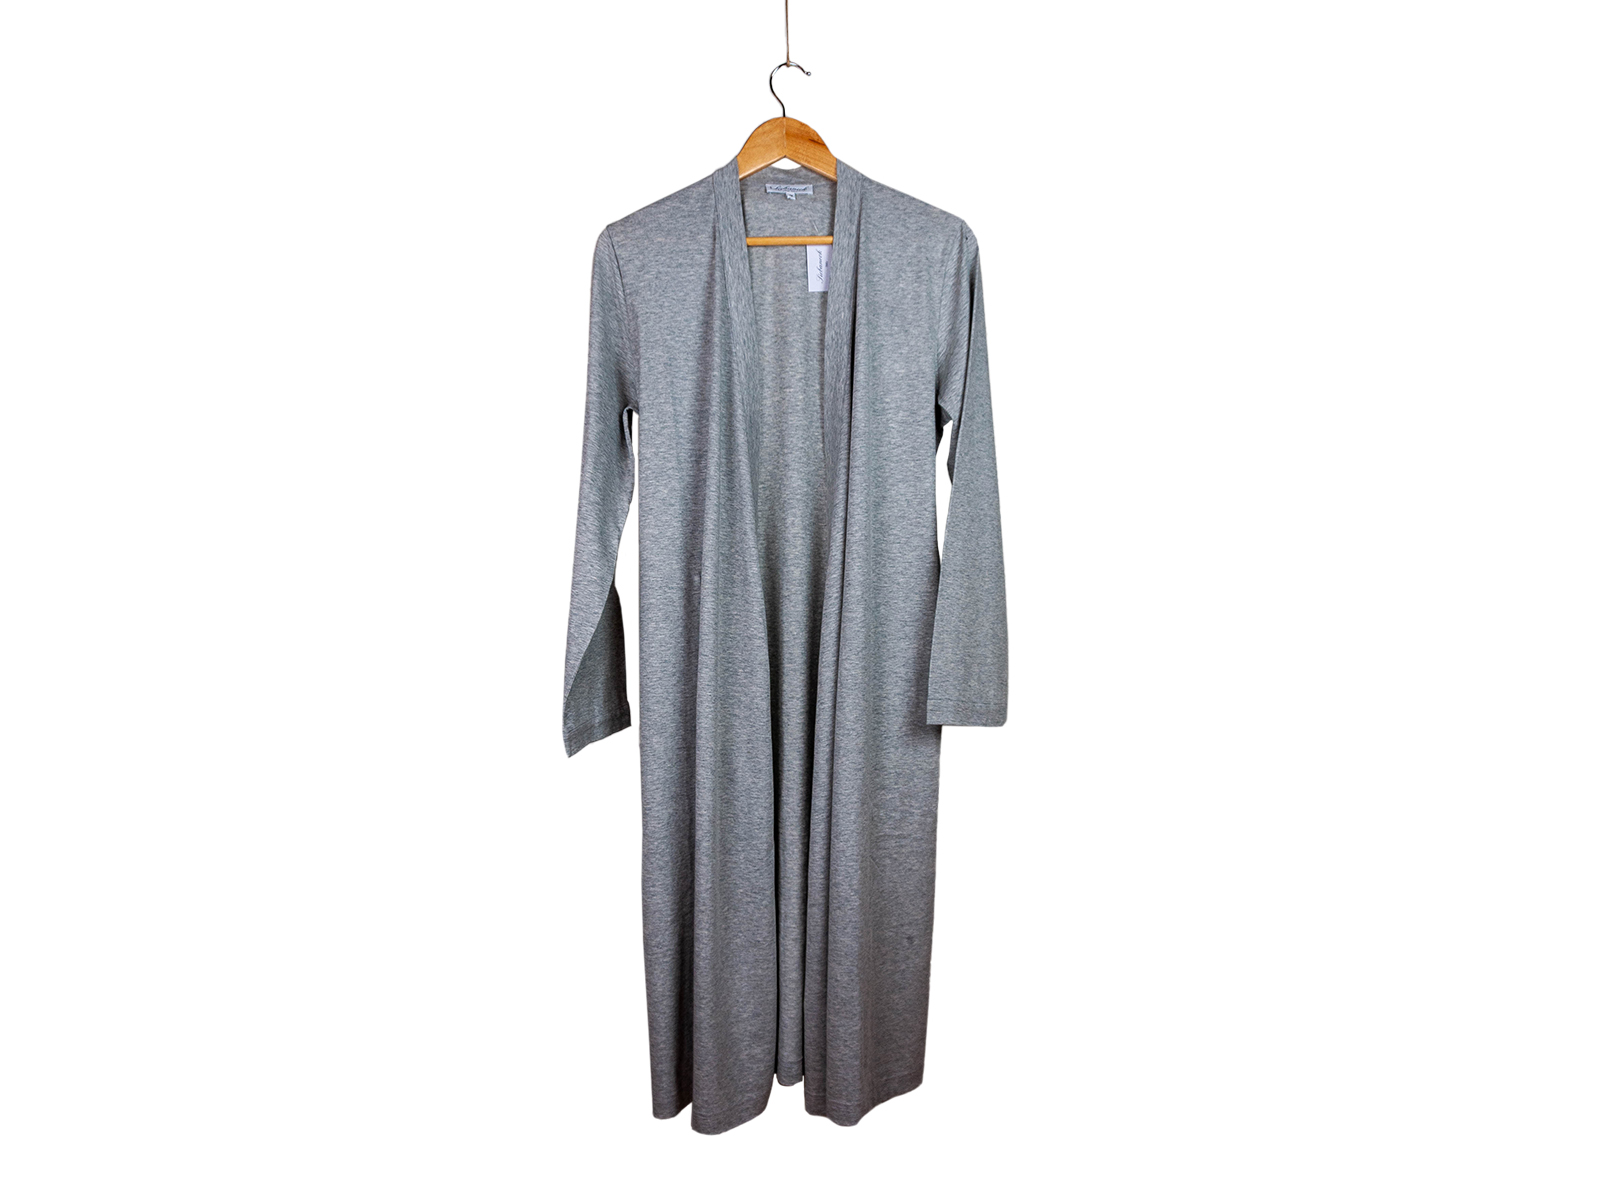 Siebaneck, i pigiami artigianali italiani: - donna - mod.131 grigio